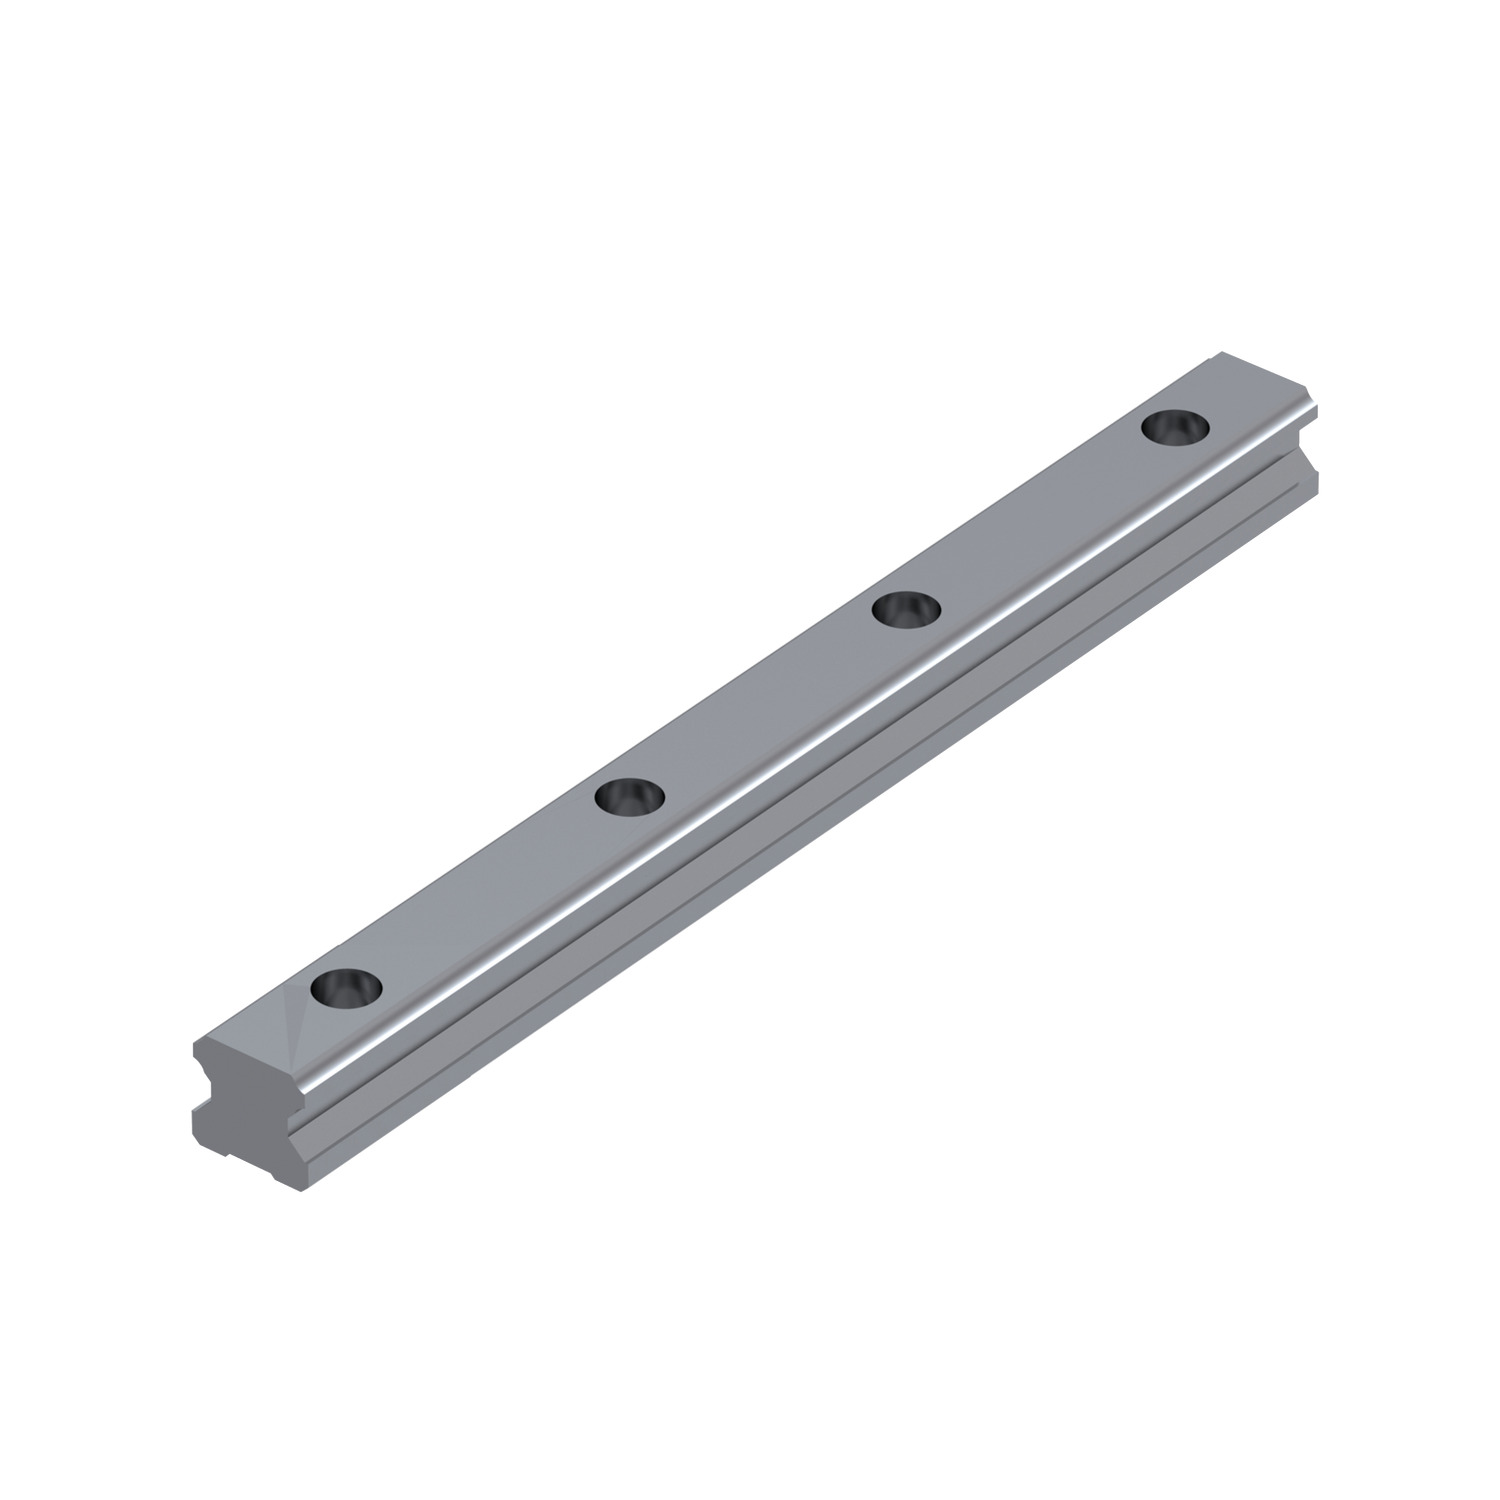 L1016.35 - 35mm Linear Guide Rail